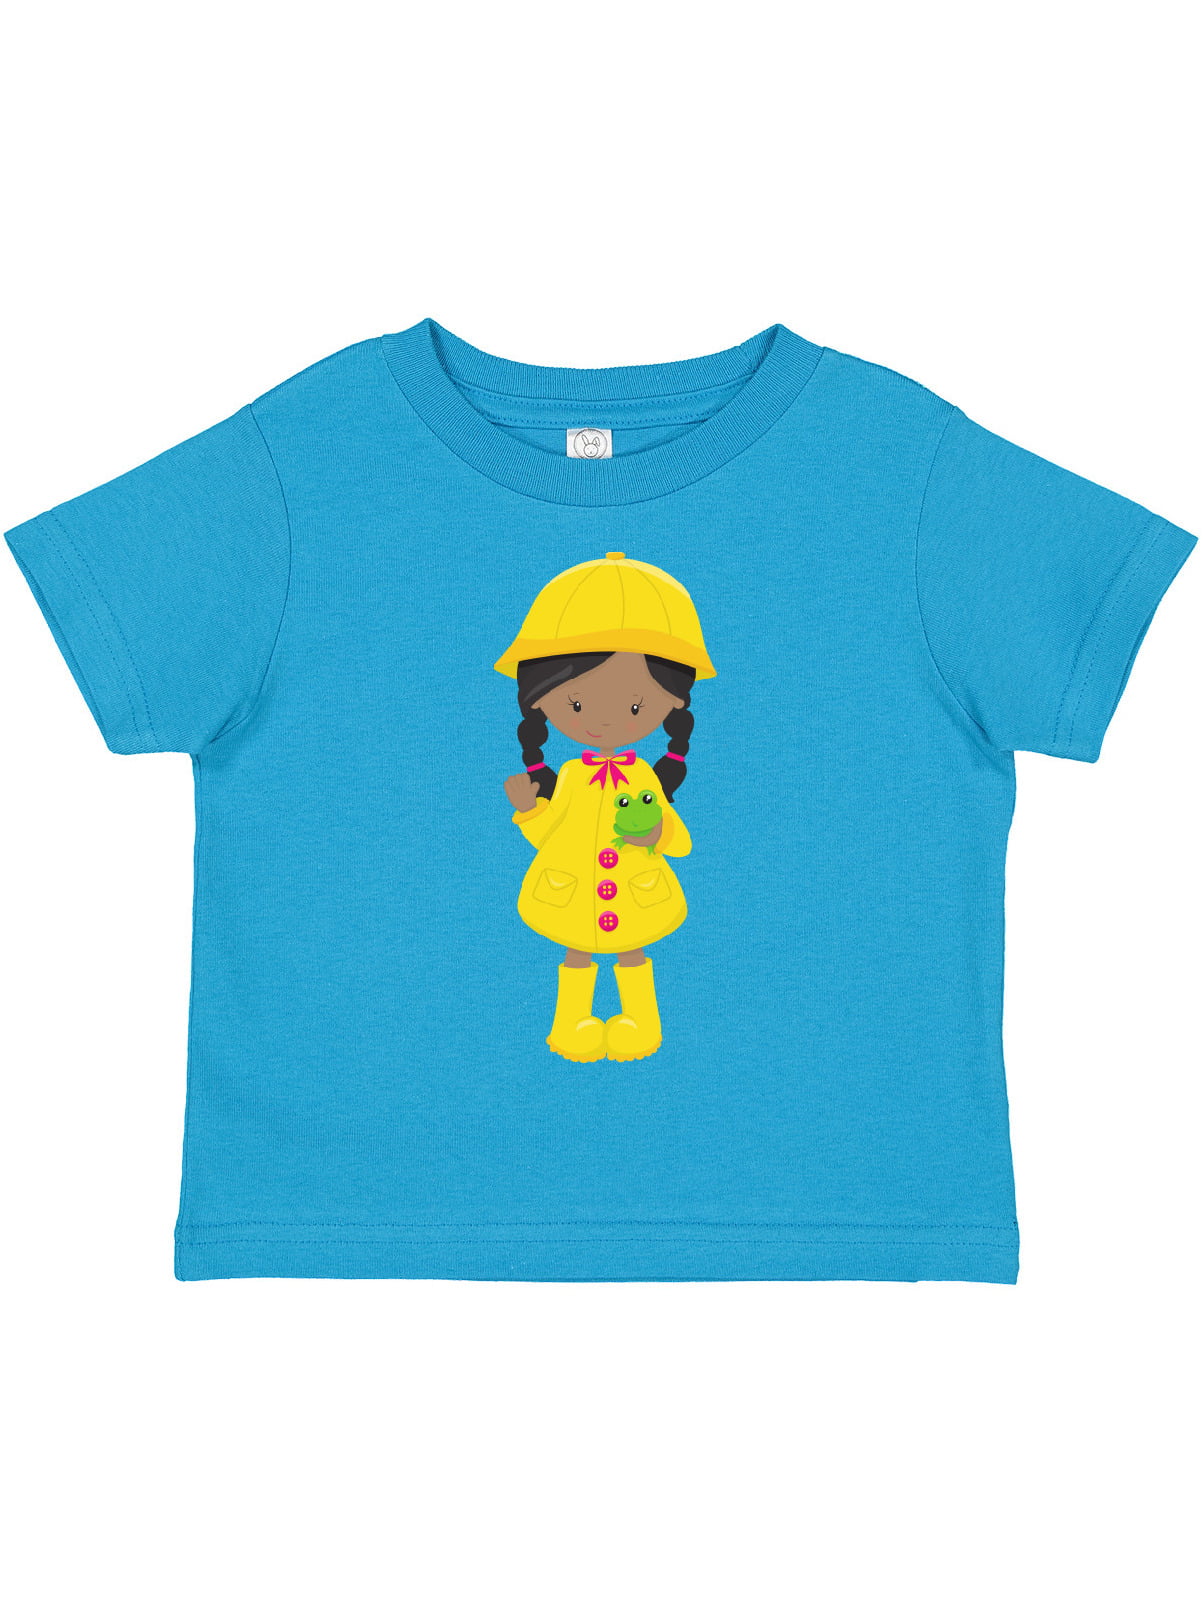 Skater Sloth and The Donuts Rain Toddler Baby Girls Short Sleeve Ruffle T-Shirt 